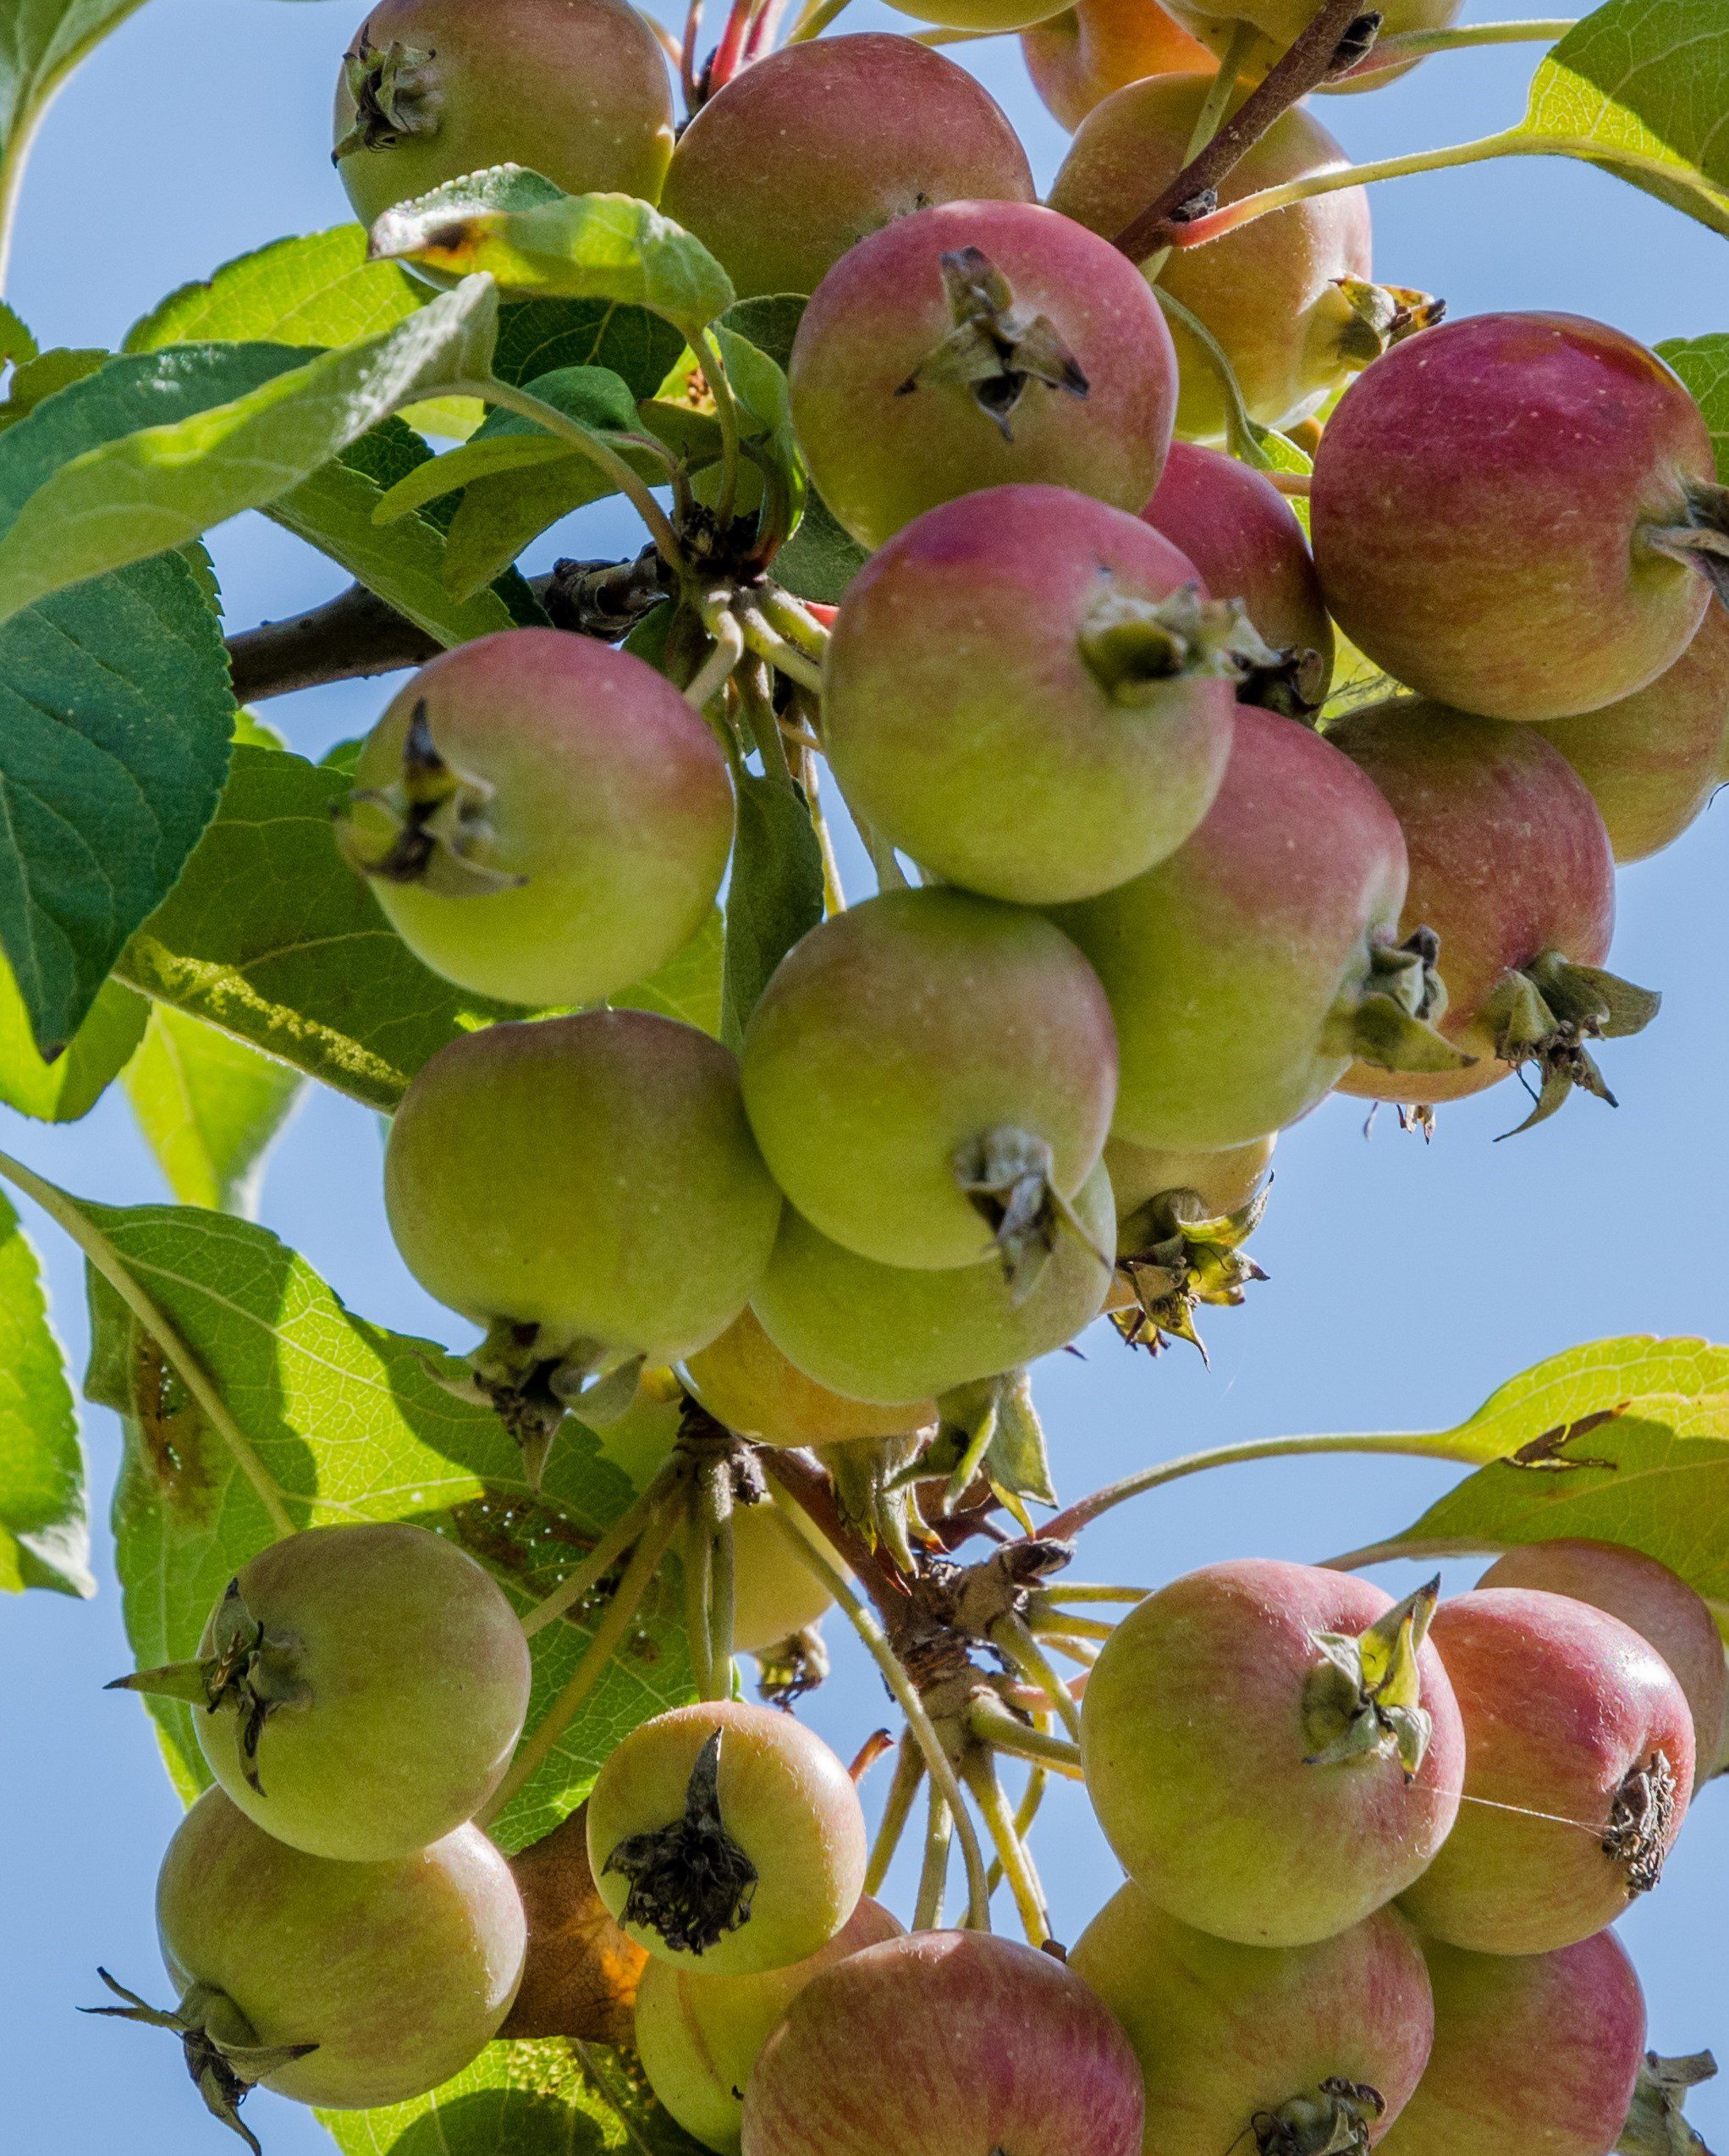 Malus sylvestris apples growing on tree